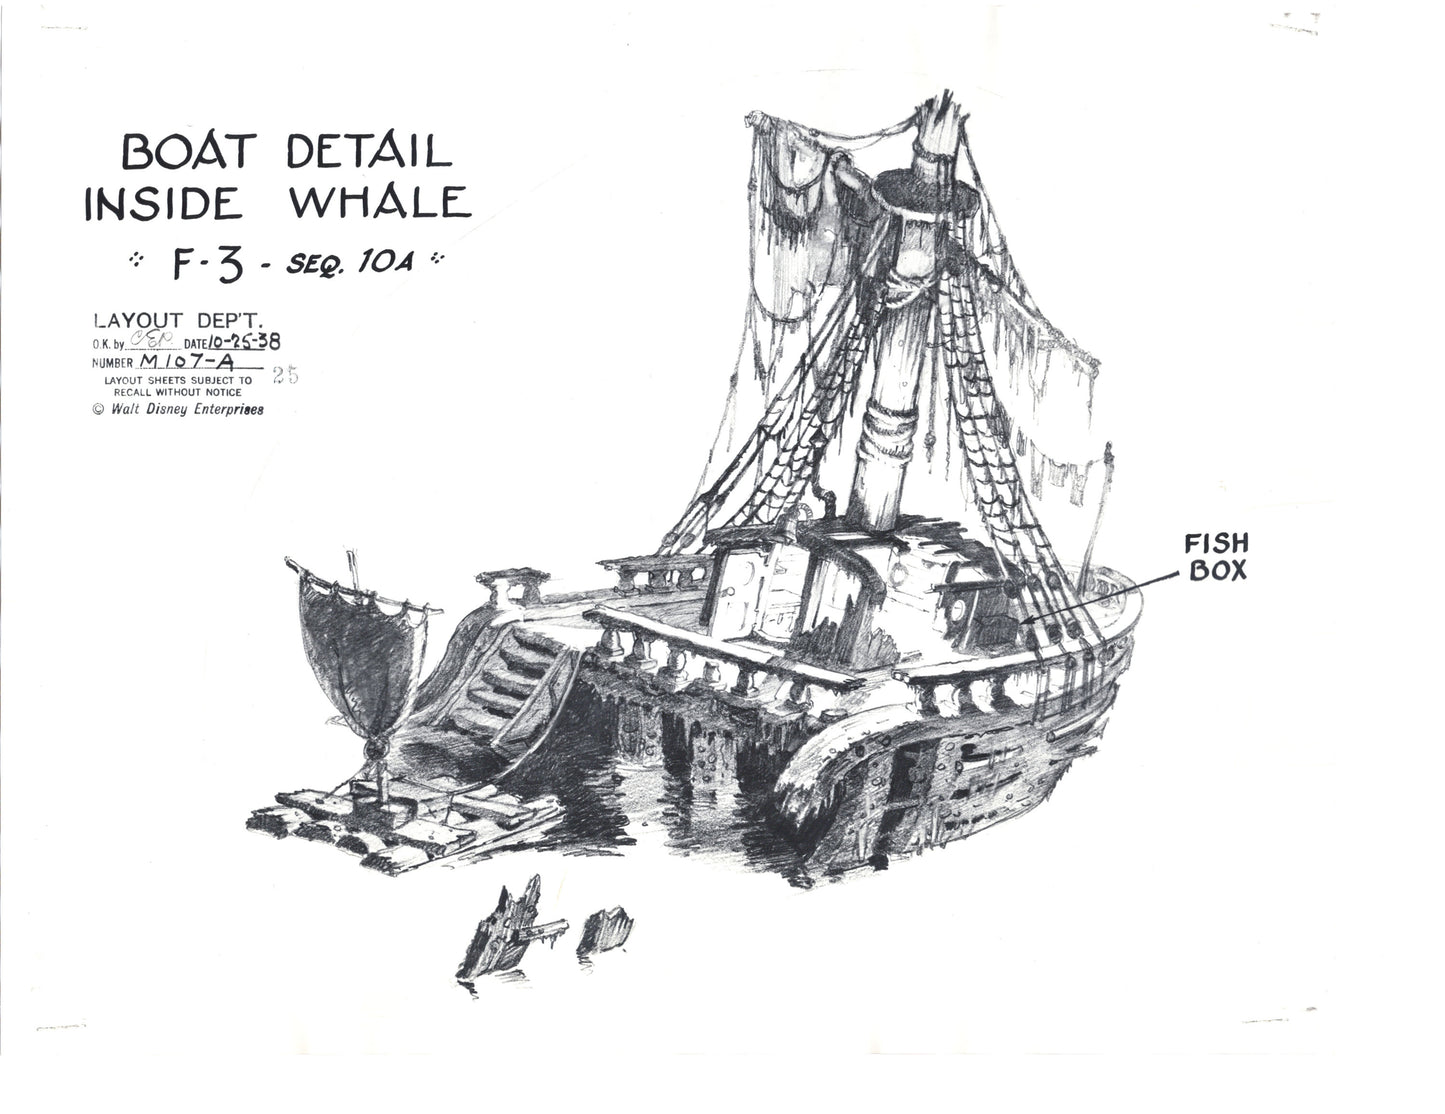 Pinocchio Boat Detail Inside Whale Walt Disney production animation model sheet 1930s